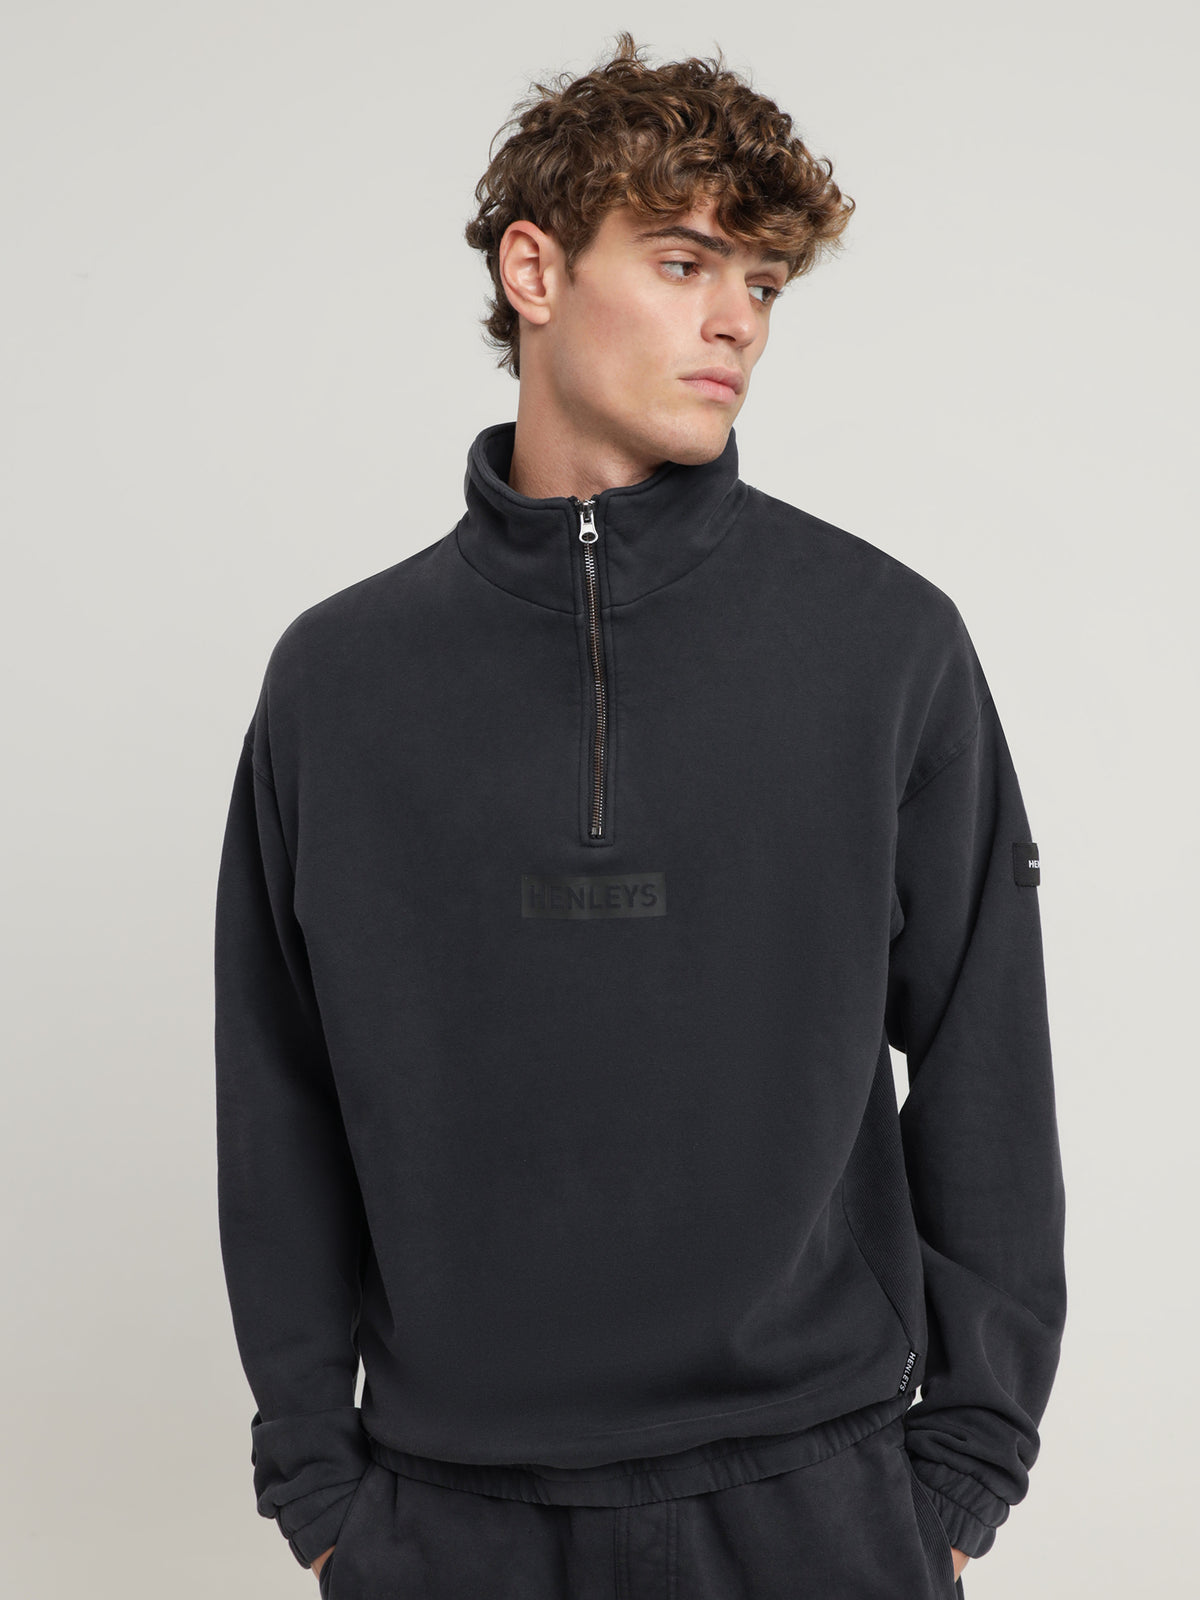 Micro Staple Zip Sweater in Black